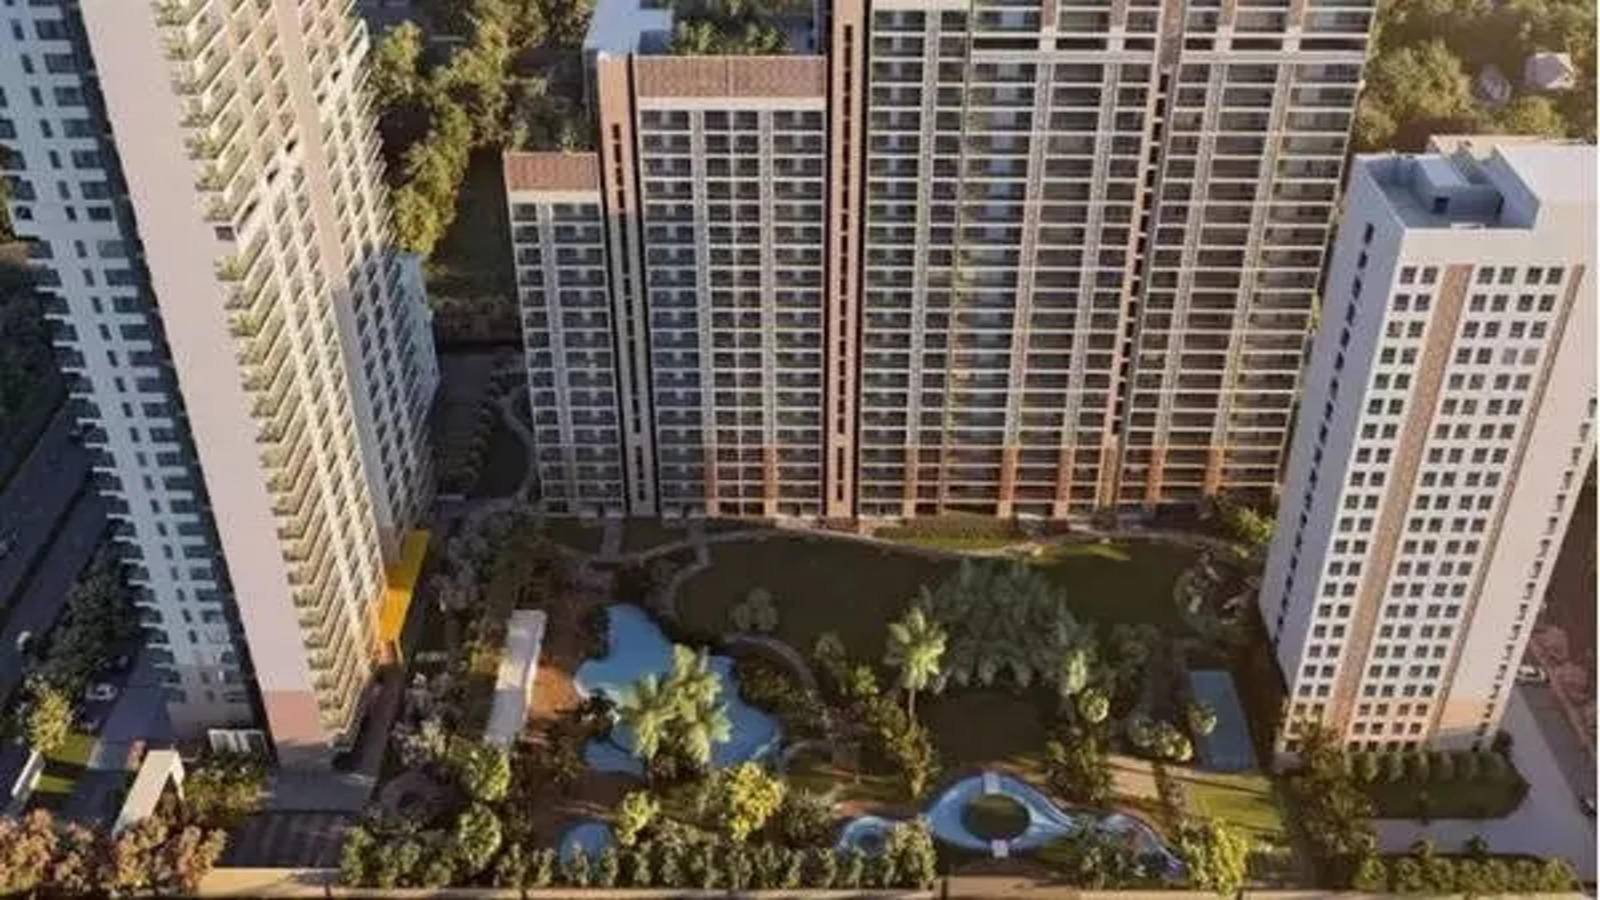 Godrej Properties eyes Rs 3,000 cr revenue from new luxury housing project in Gurugram